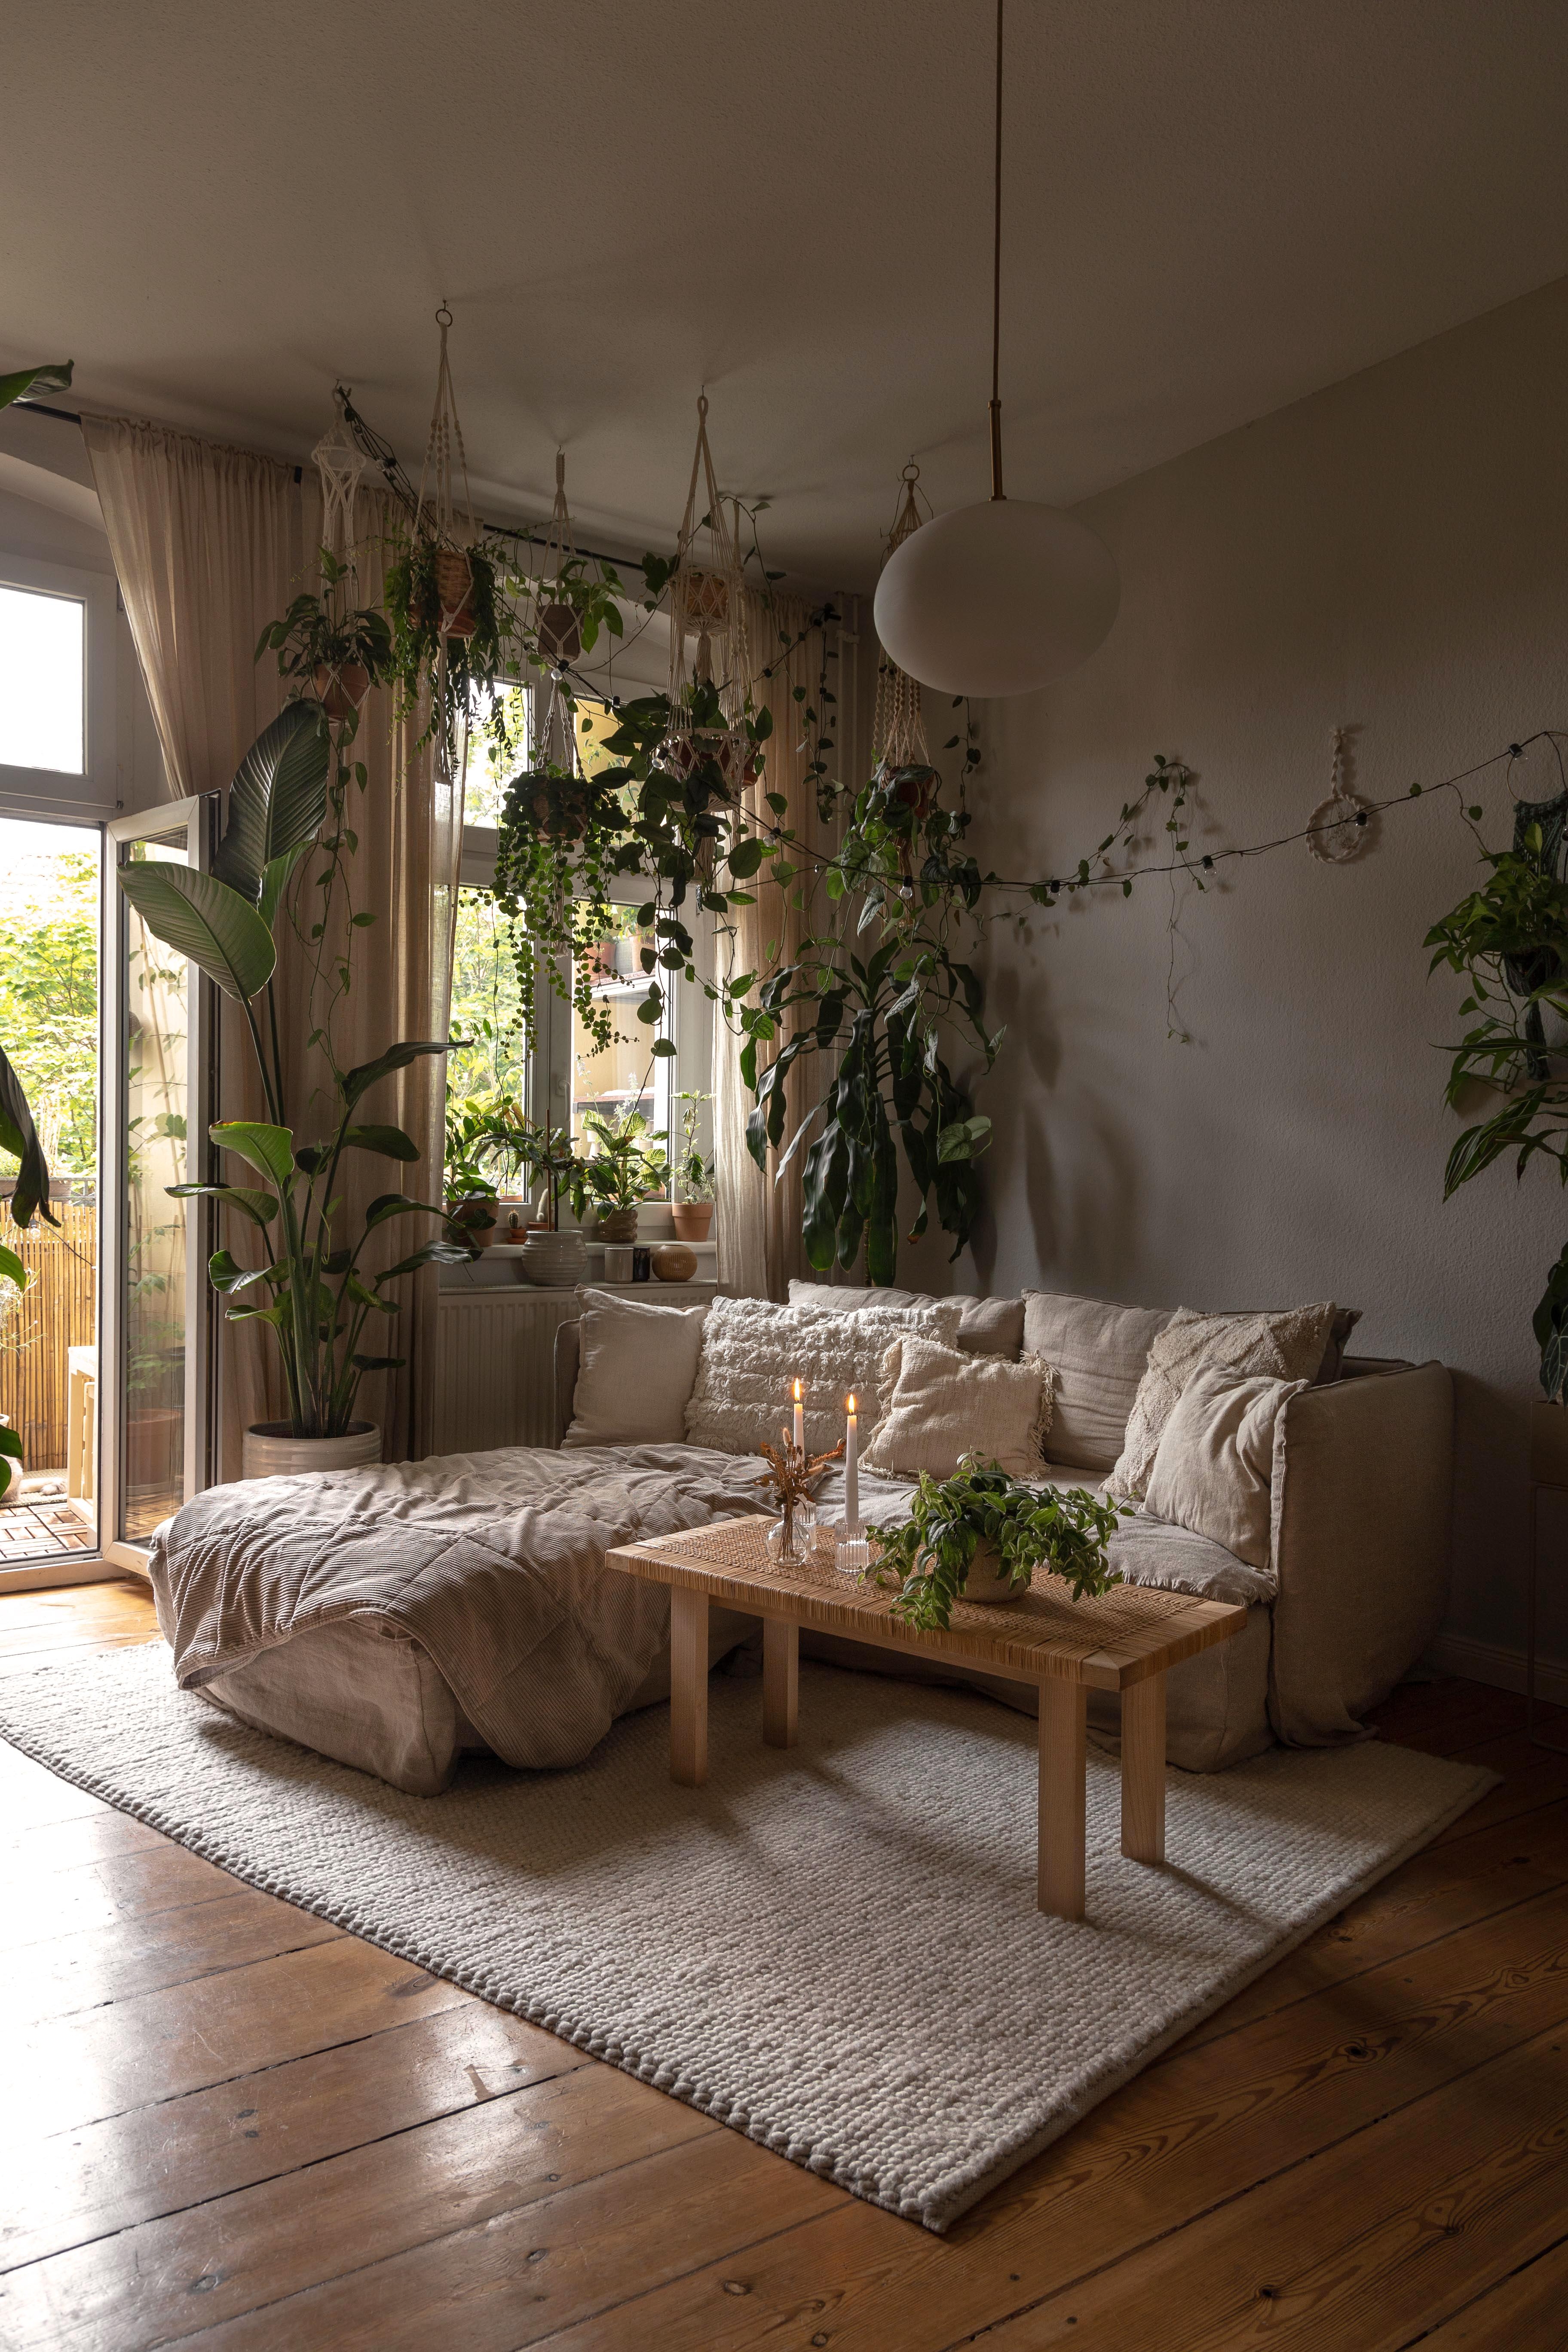 #wohnzimmer #einrichtung #livingroom #livingroominspo #interior #interiorinspo #home #homedecor #homeinspo #bohointerior